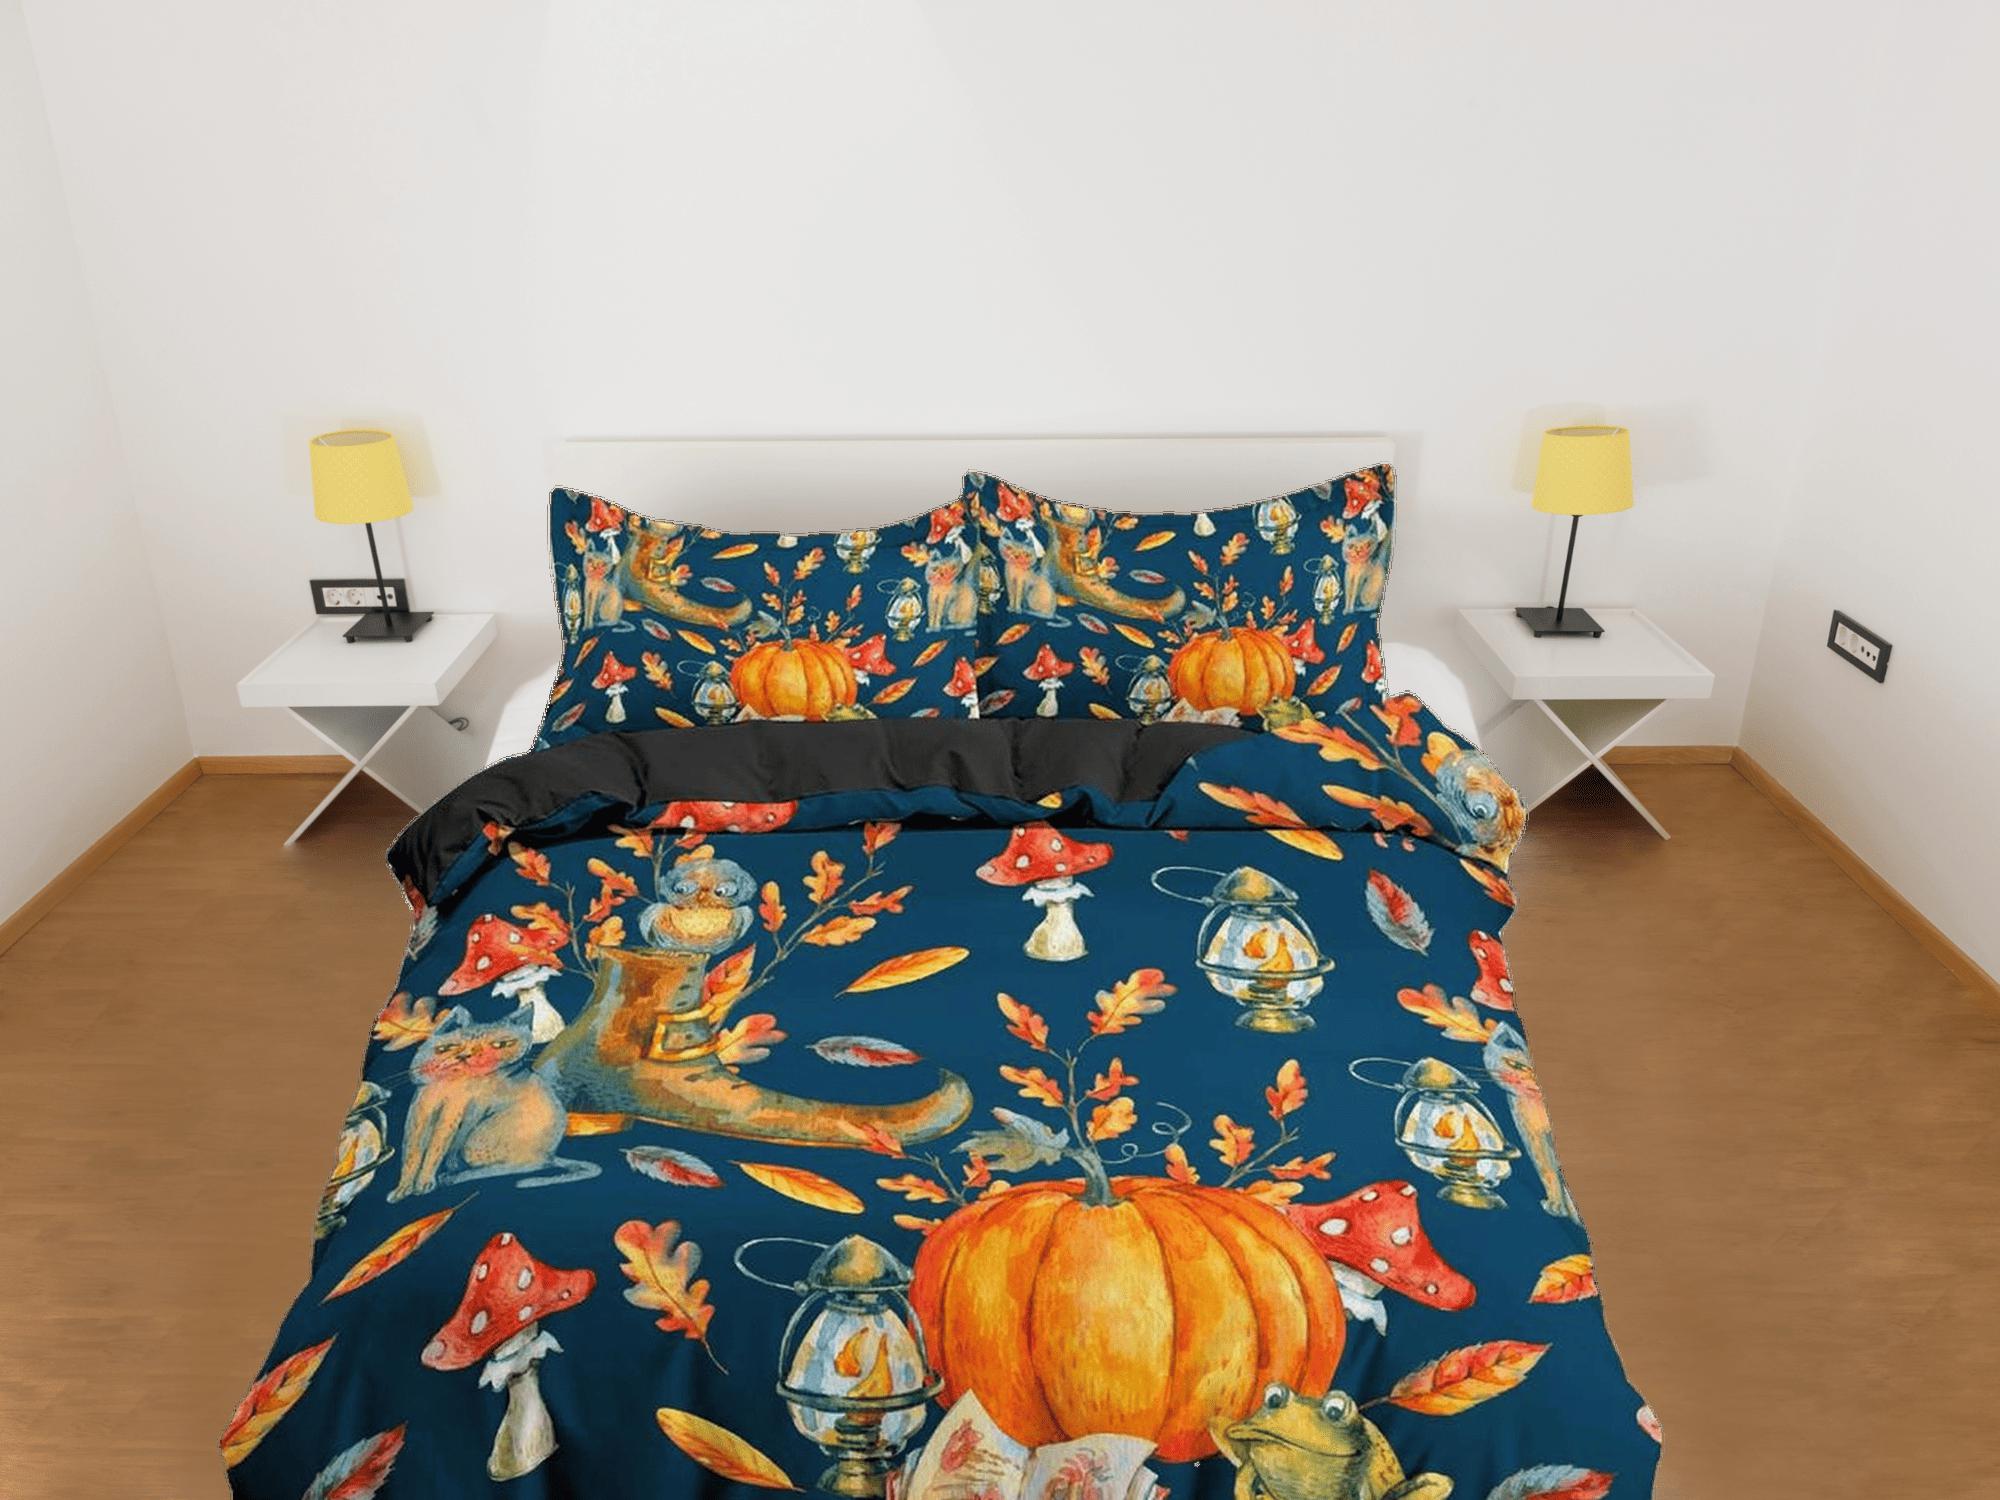 daintyduvet Vintage halloween bedding & pillowcase, blue duvet cover set dorm bedding, halloween decor, toddler bedding, pumpkin mushroom frog prints